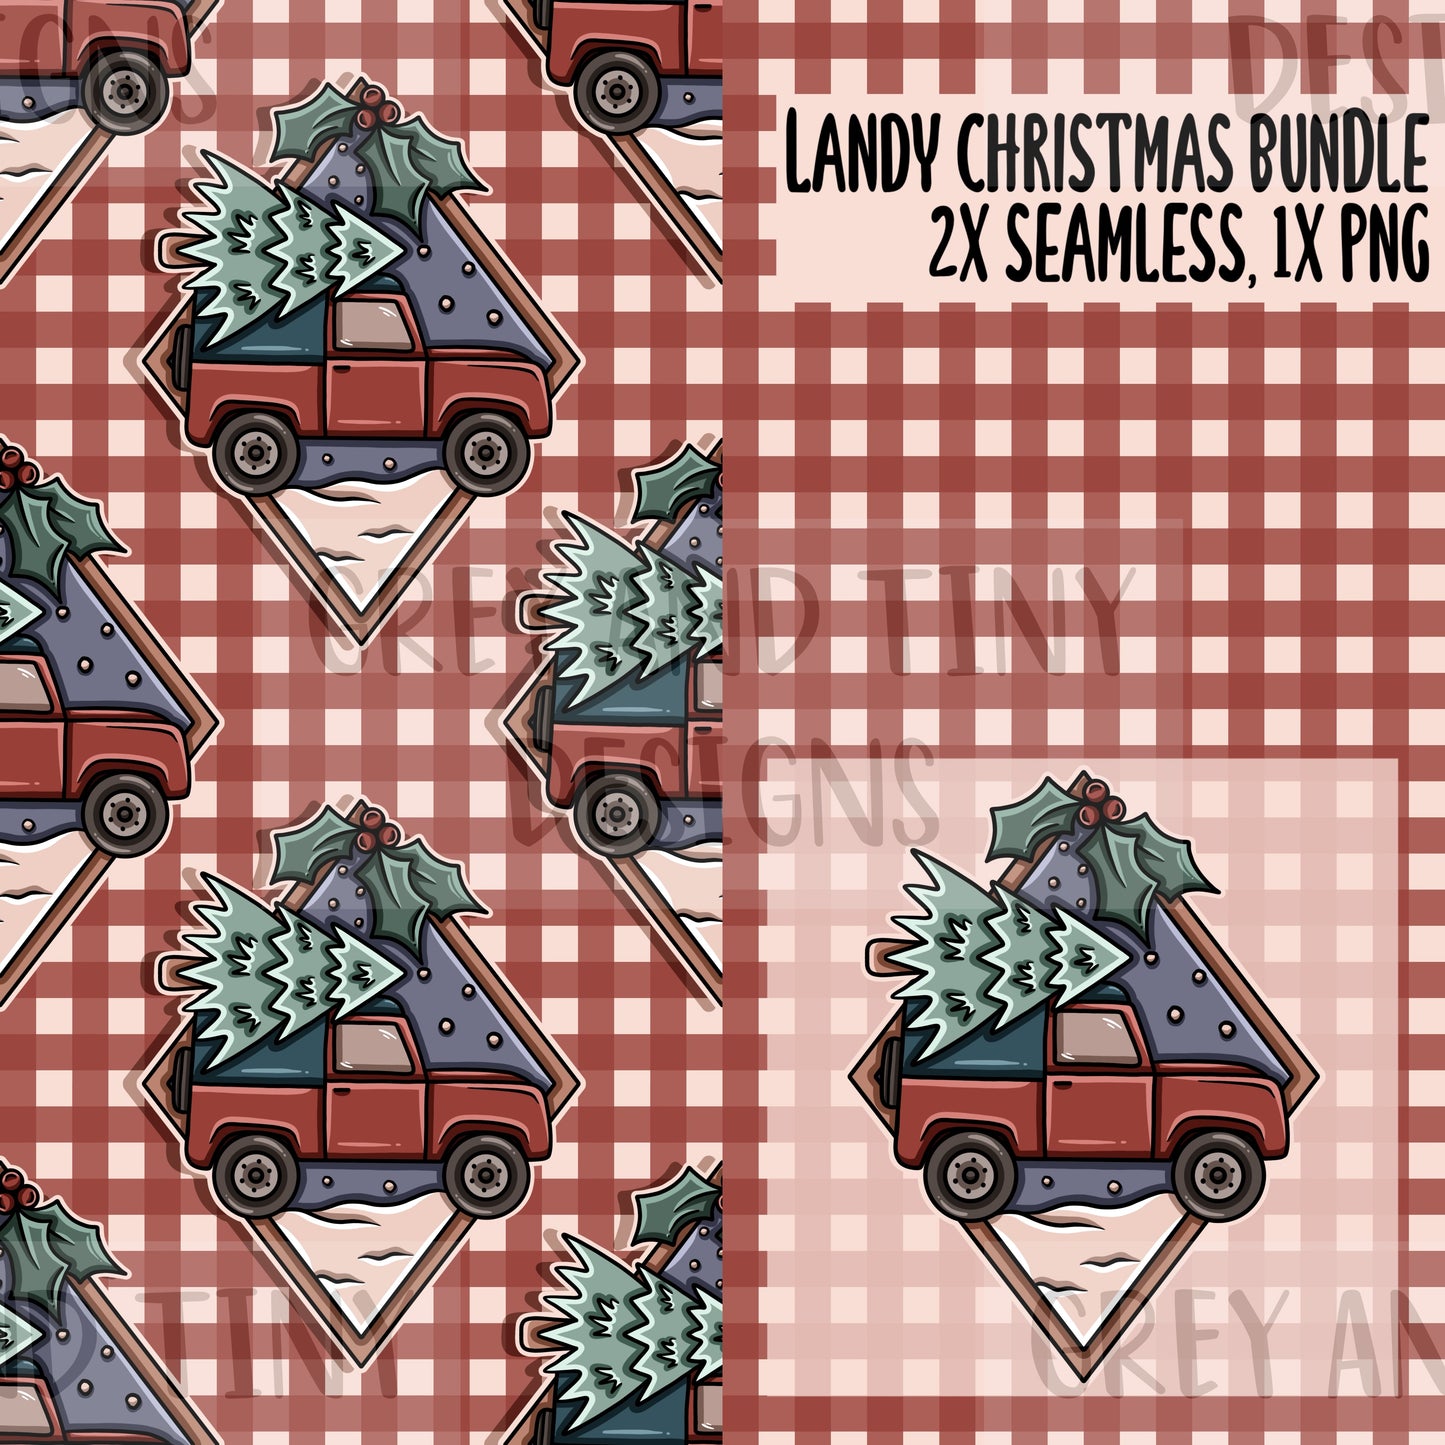 Landy Christmas bundle